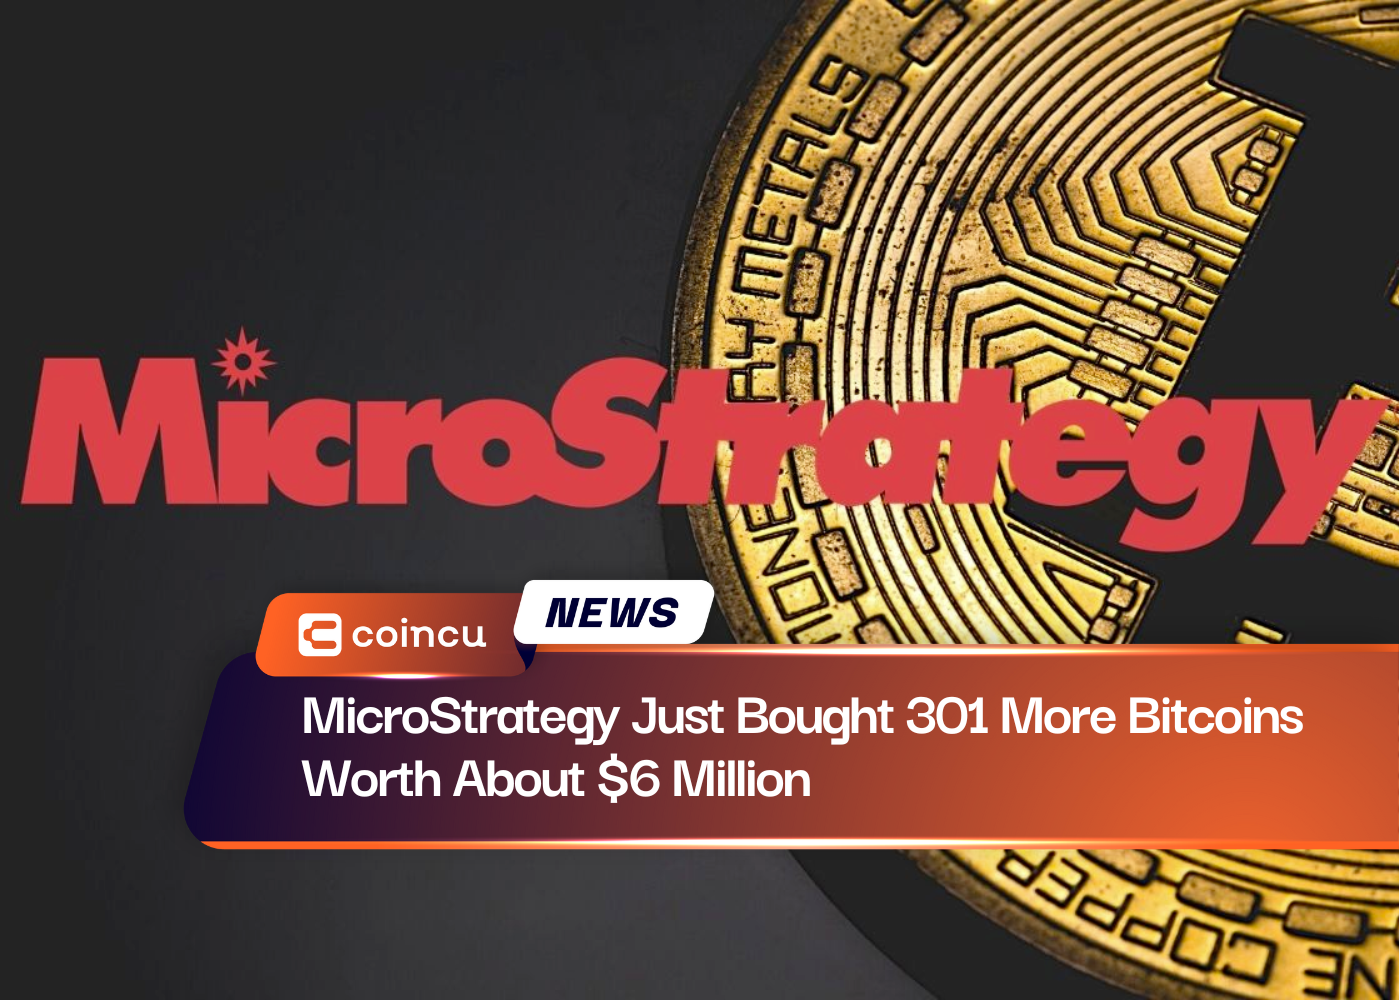 MicroStrategy 刚刚购买了 301 个比特币，价值约 6 万美元